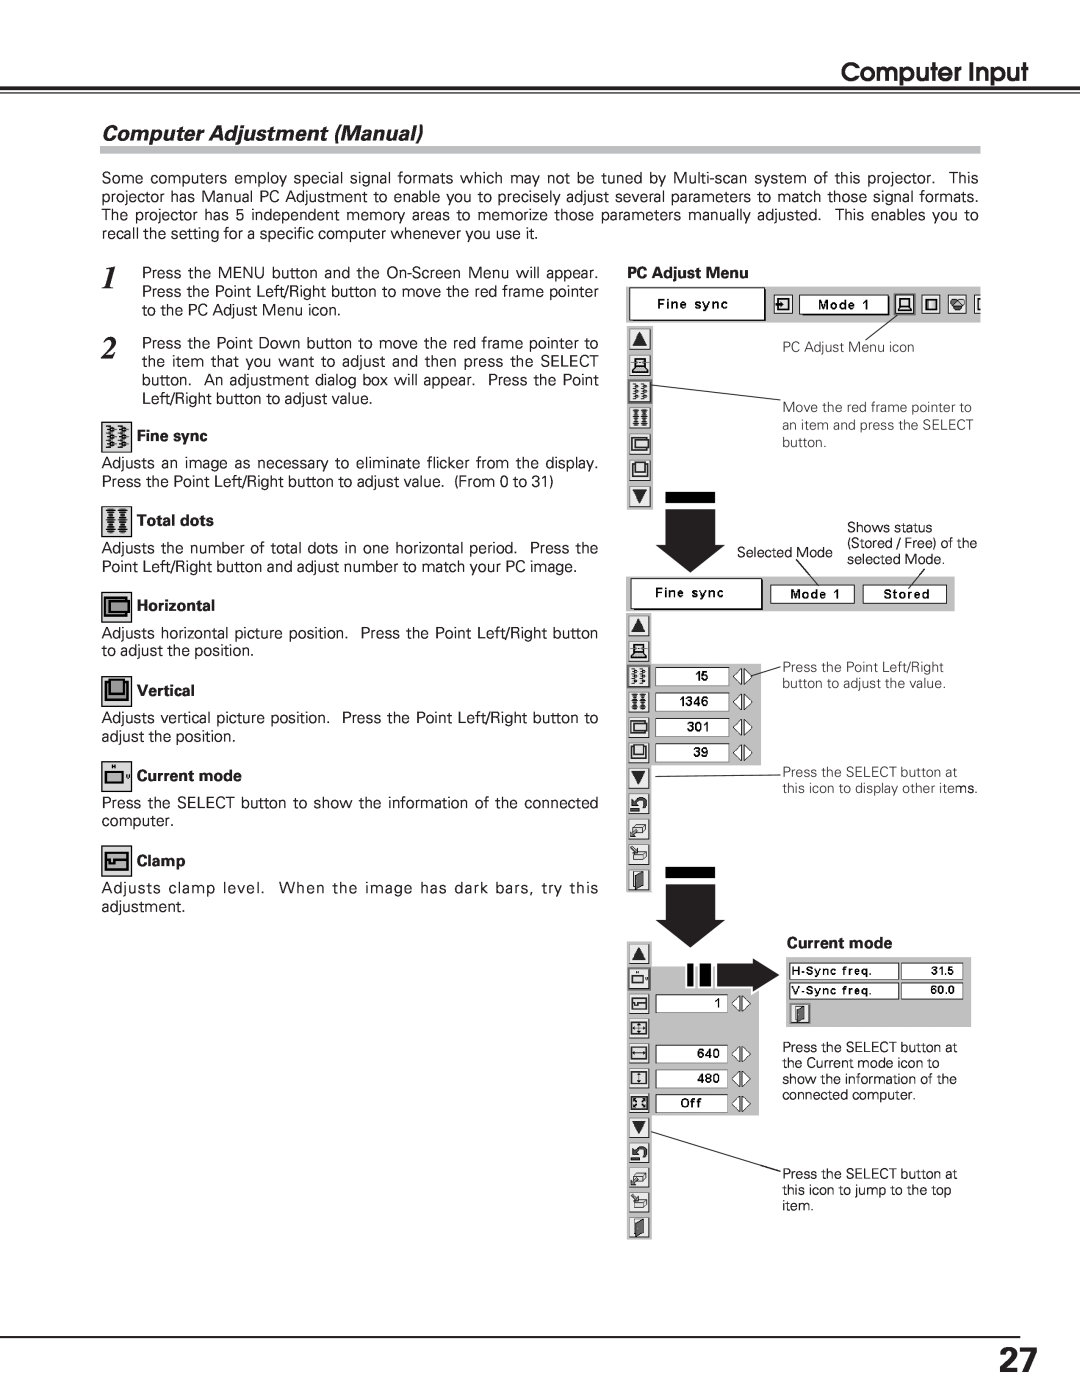 Eiki lc-sb15 Computer Adjustment Manual, Computer Input, Fine sync, Total dots, Horizontal, Vertical, Current mode, Clamp 